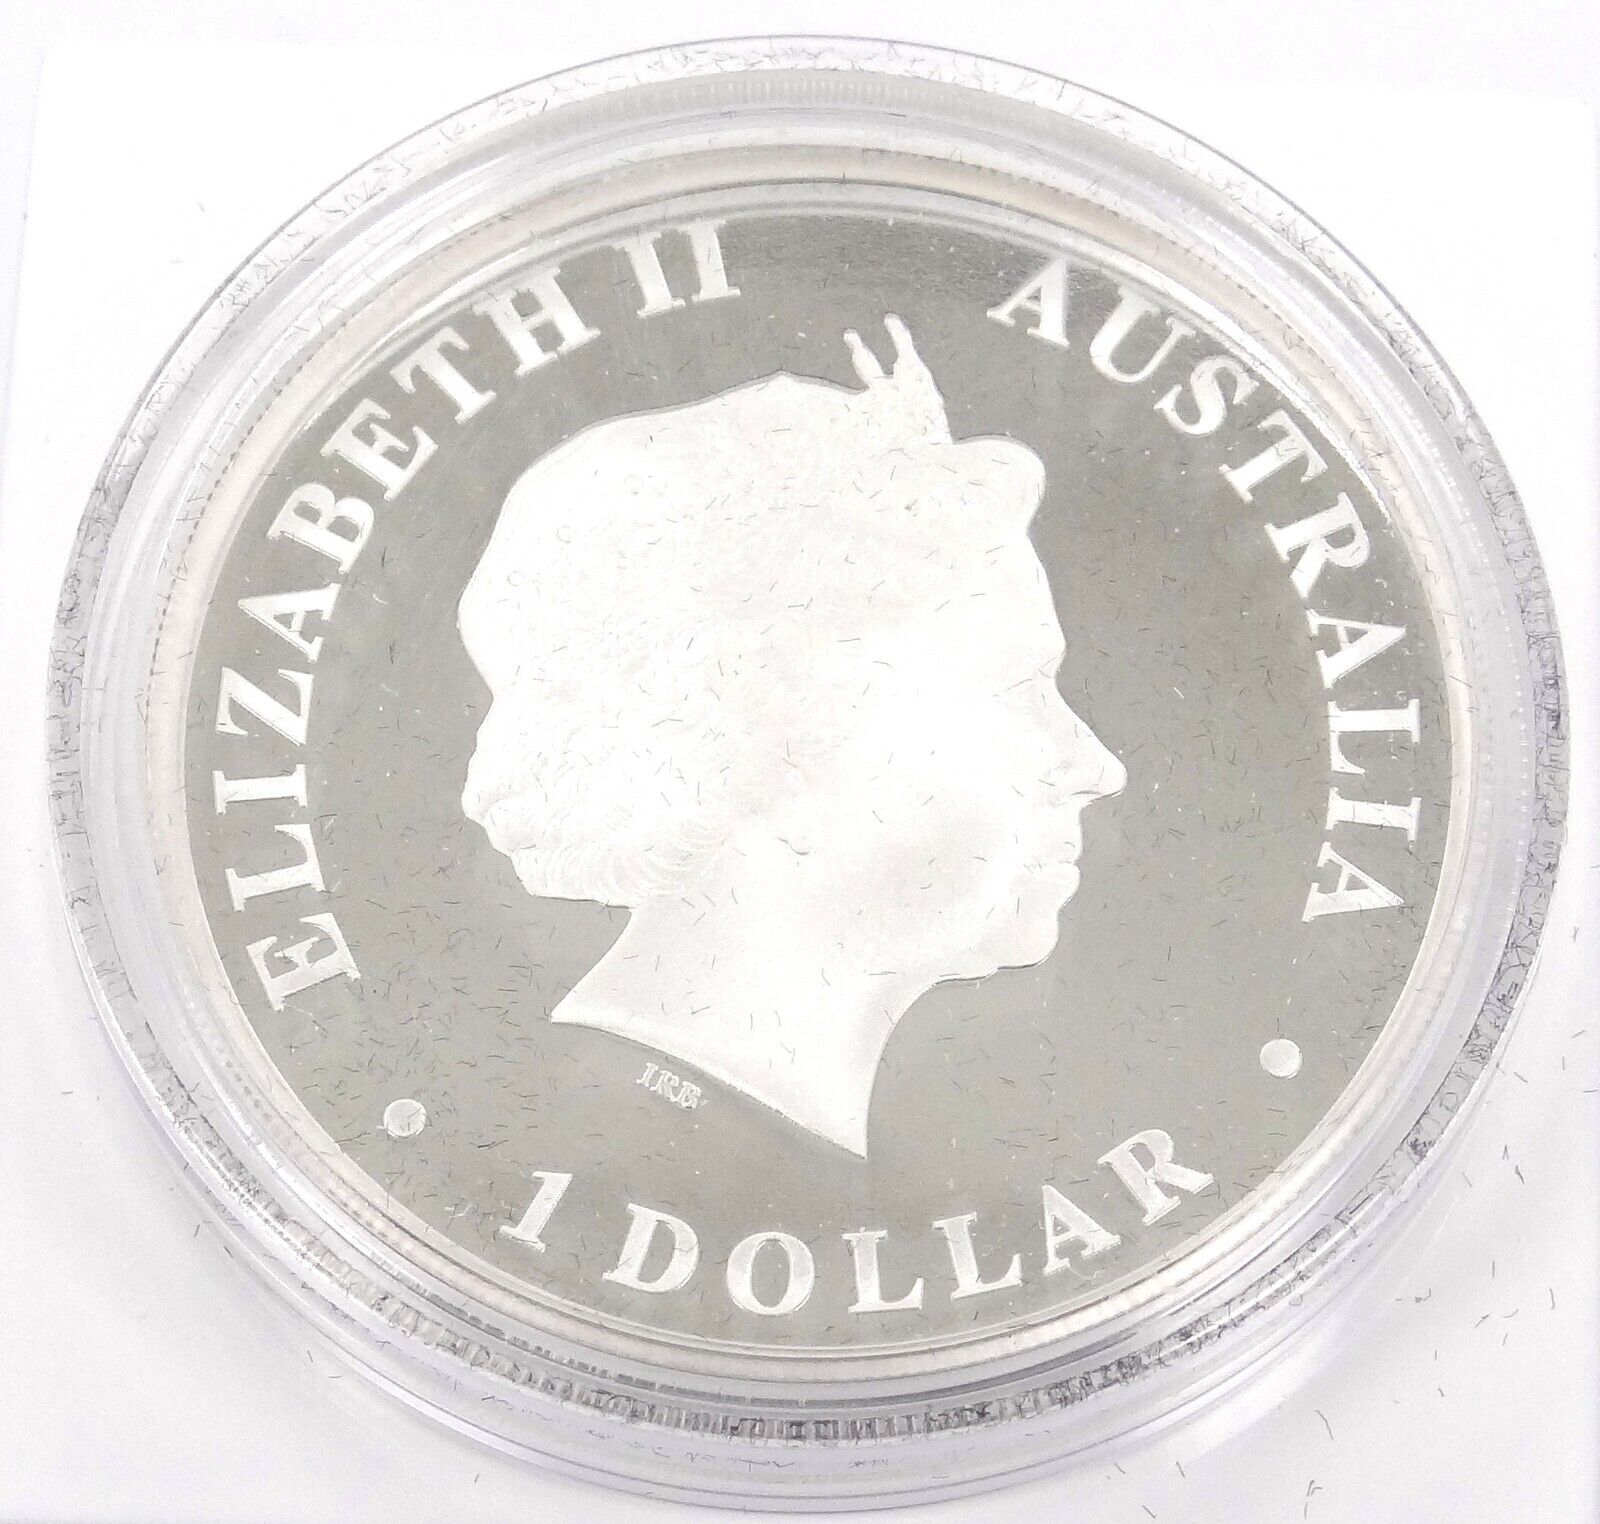 1 Oz Silver Coin 2012 $1 Australia Discover Australia Proof - Great White Shark-classypw.com-1